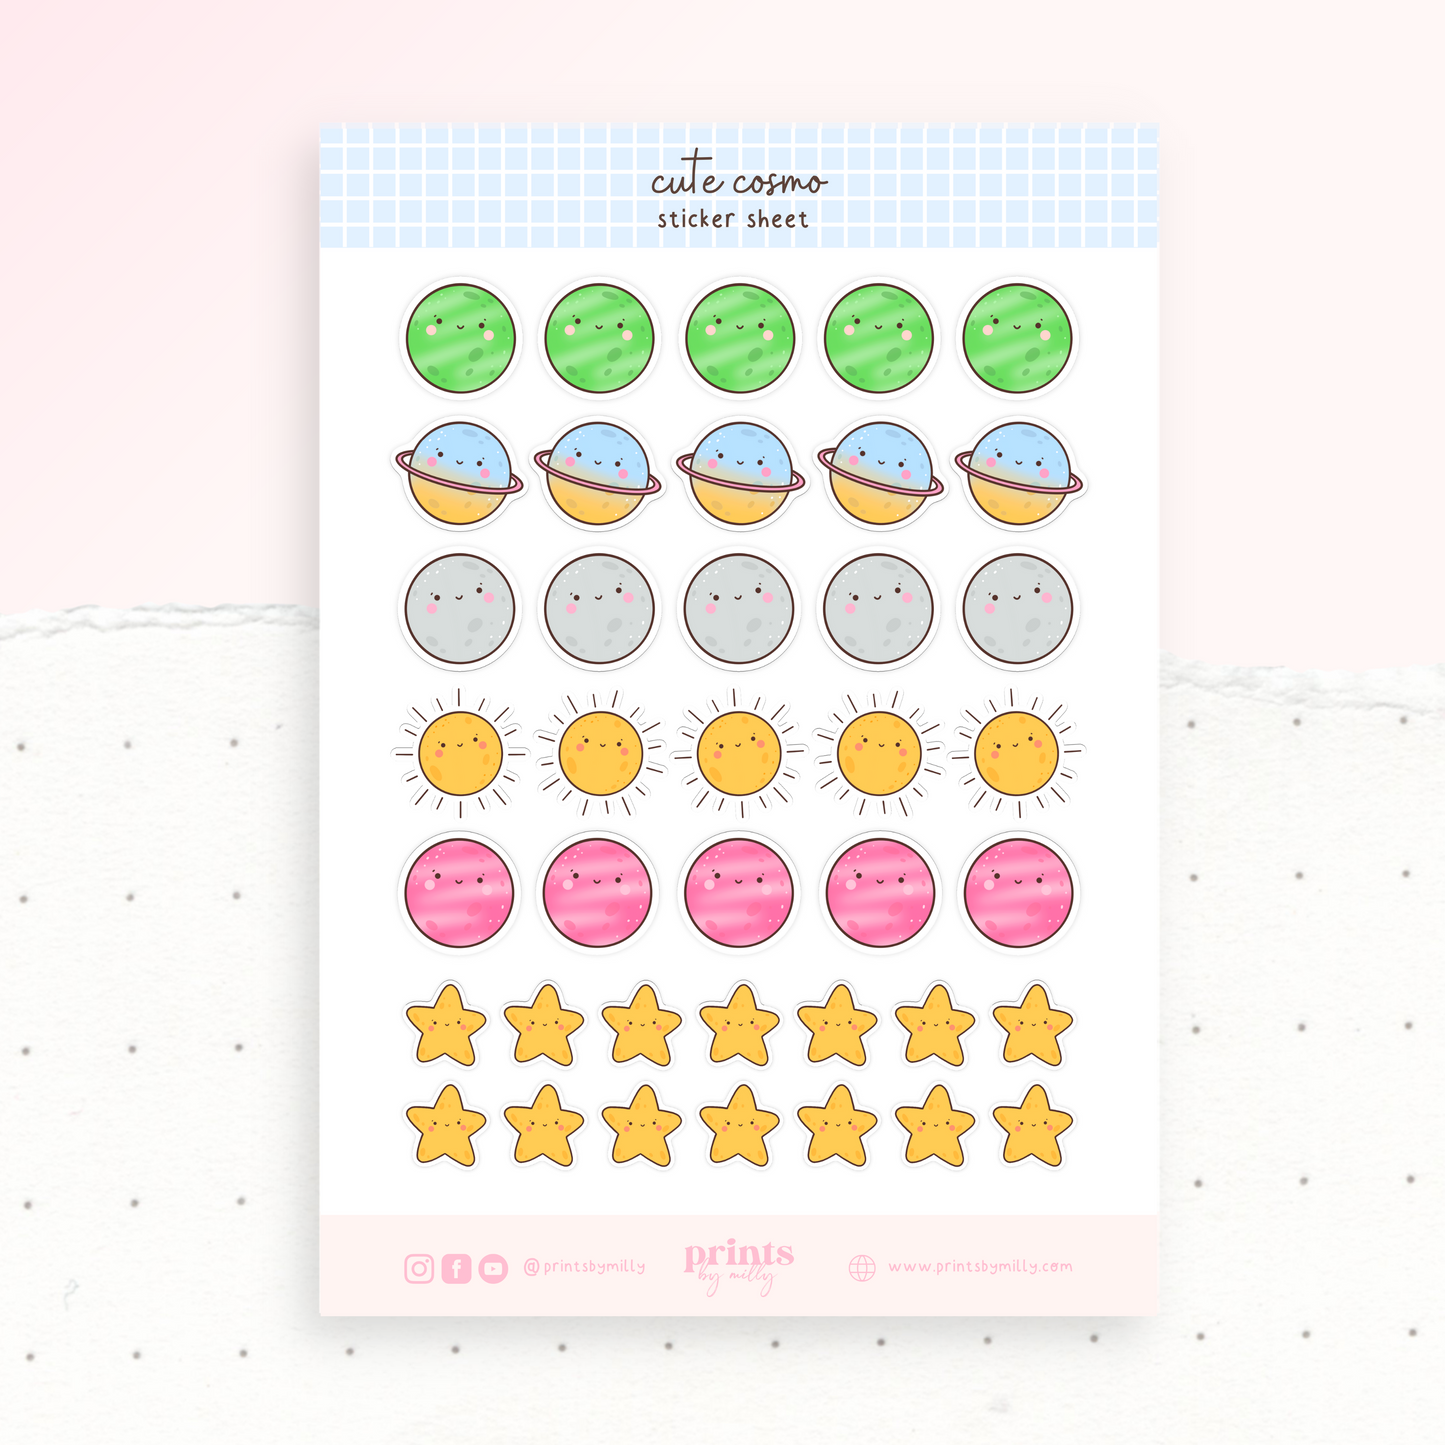 Cute Cosmo Sticker Sheet